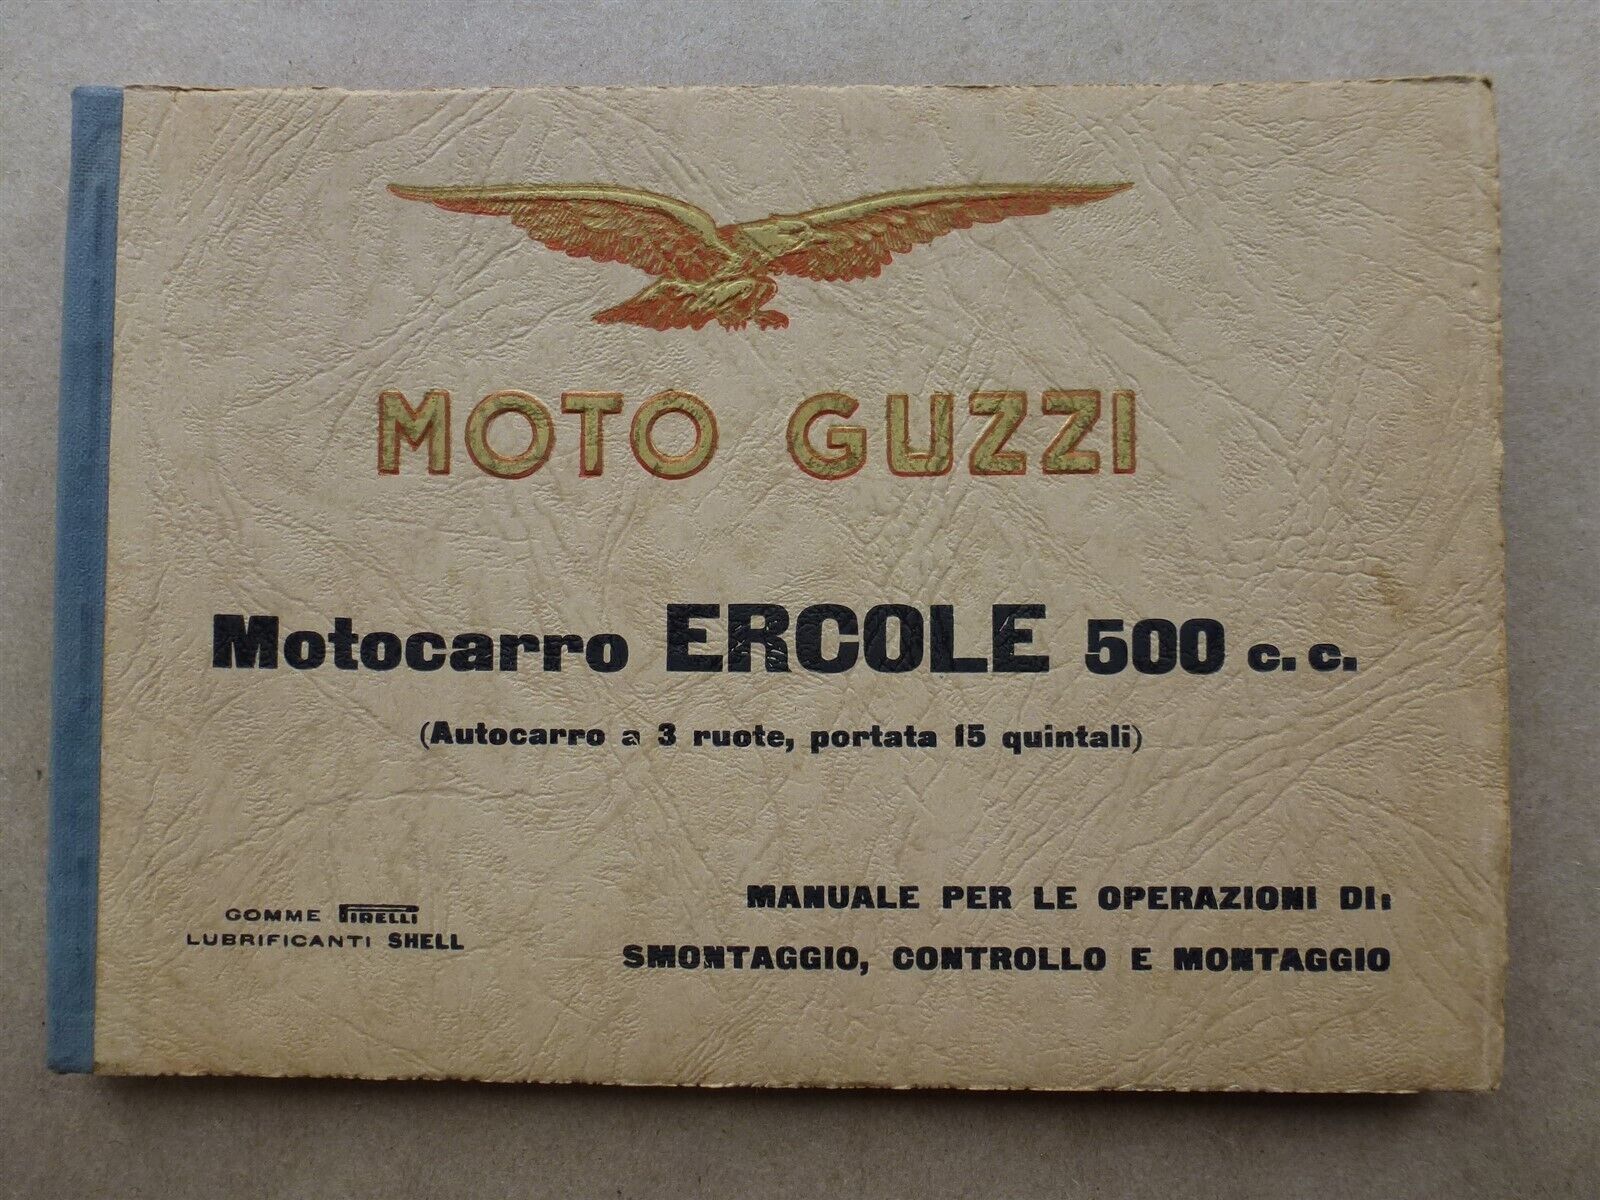 Moto Guzzi motorcycle Motocarro Ercole 500 c.c. Owner manual 1952 October